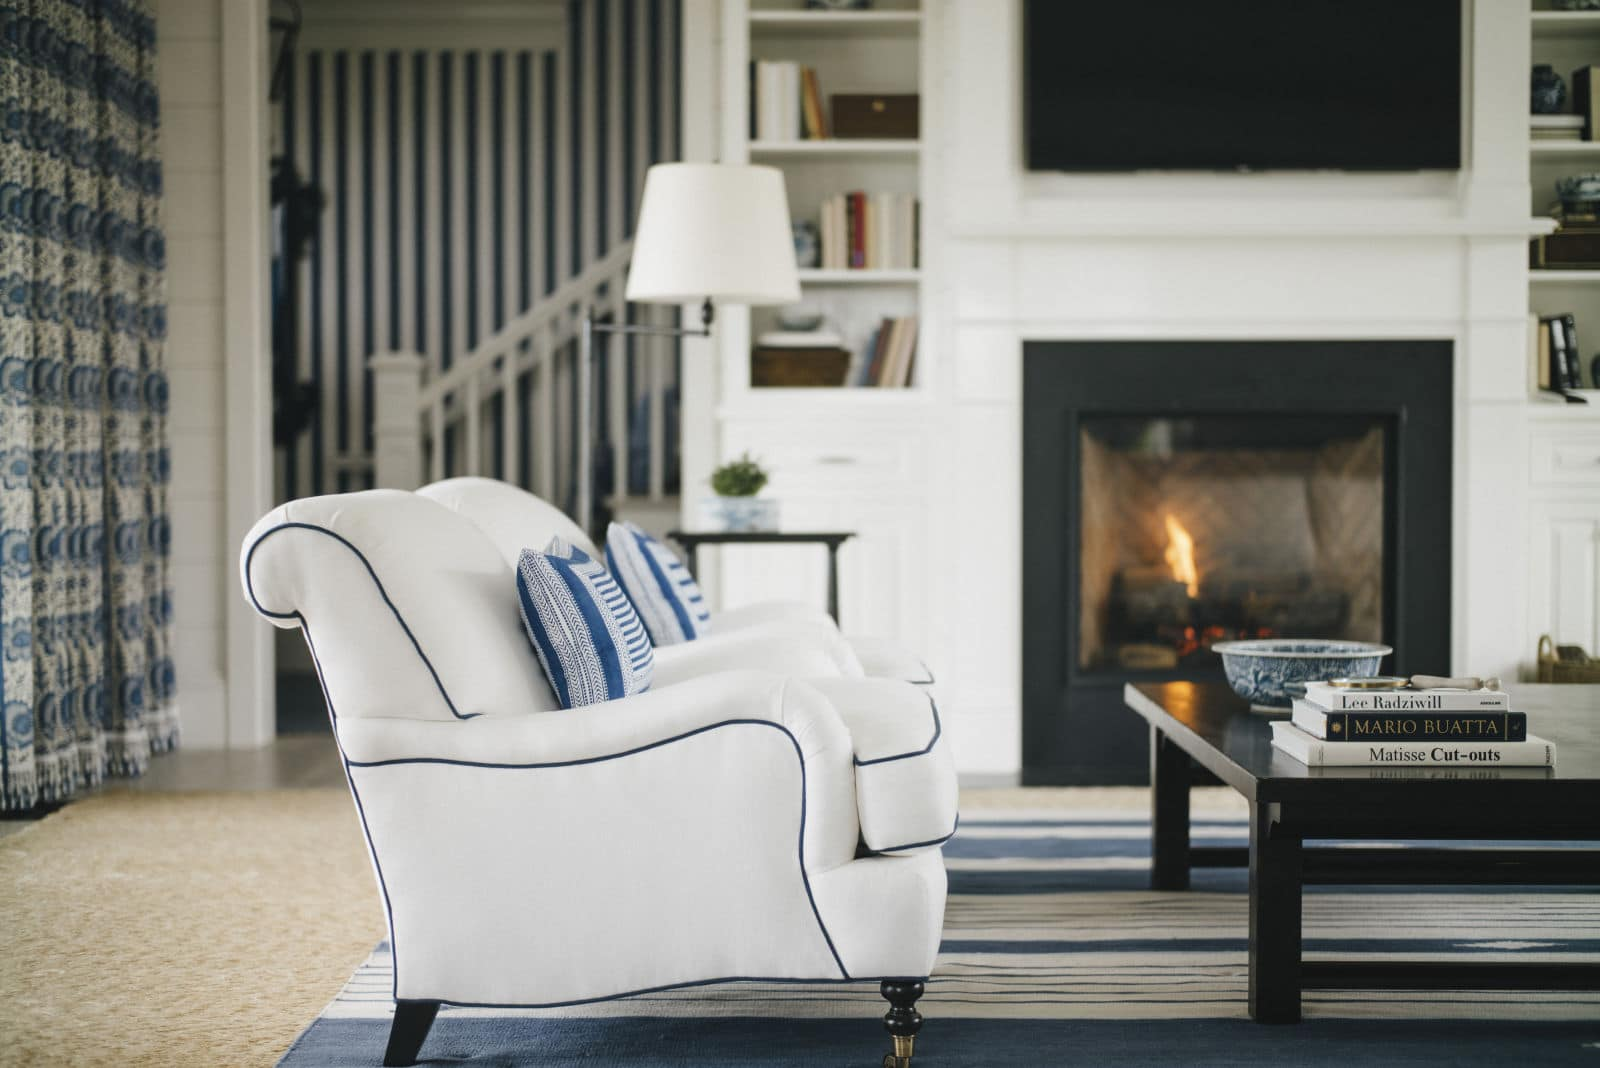 Stylish Sustainment: Custom Upholstery for Iconic Mid-Century Furniture